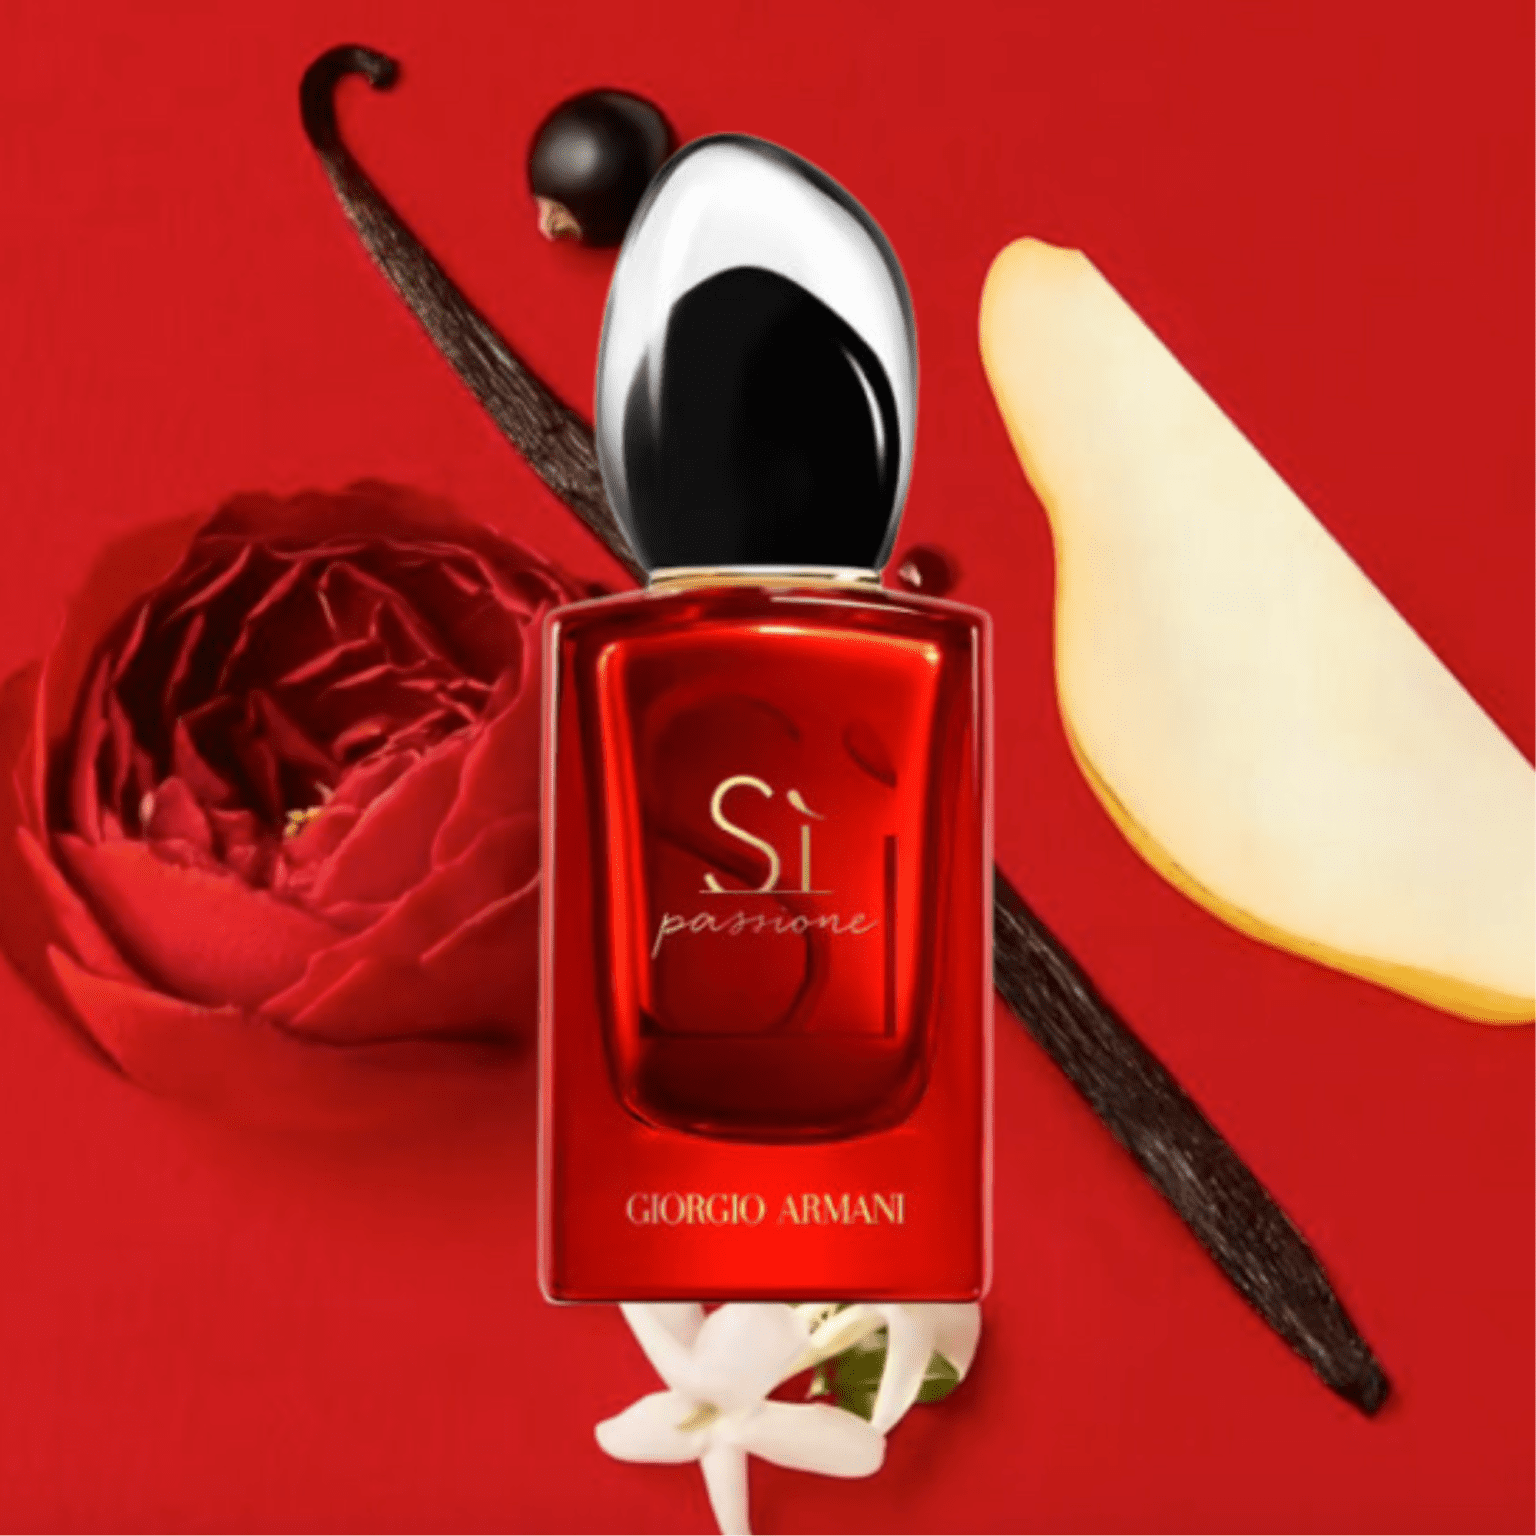 The Ultimate Guide to the Giorgio Armani Si Perfume Range | SOKI LONDON